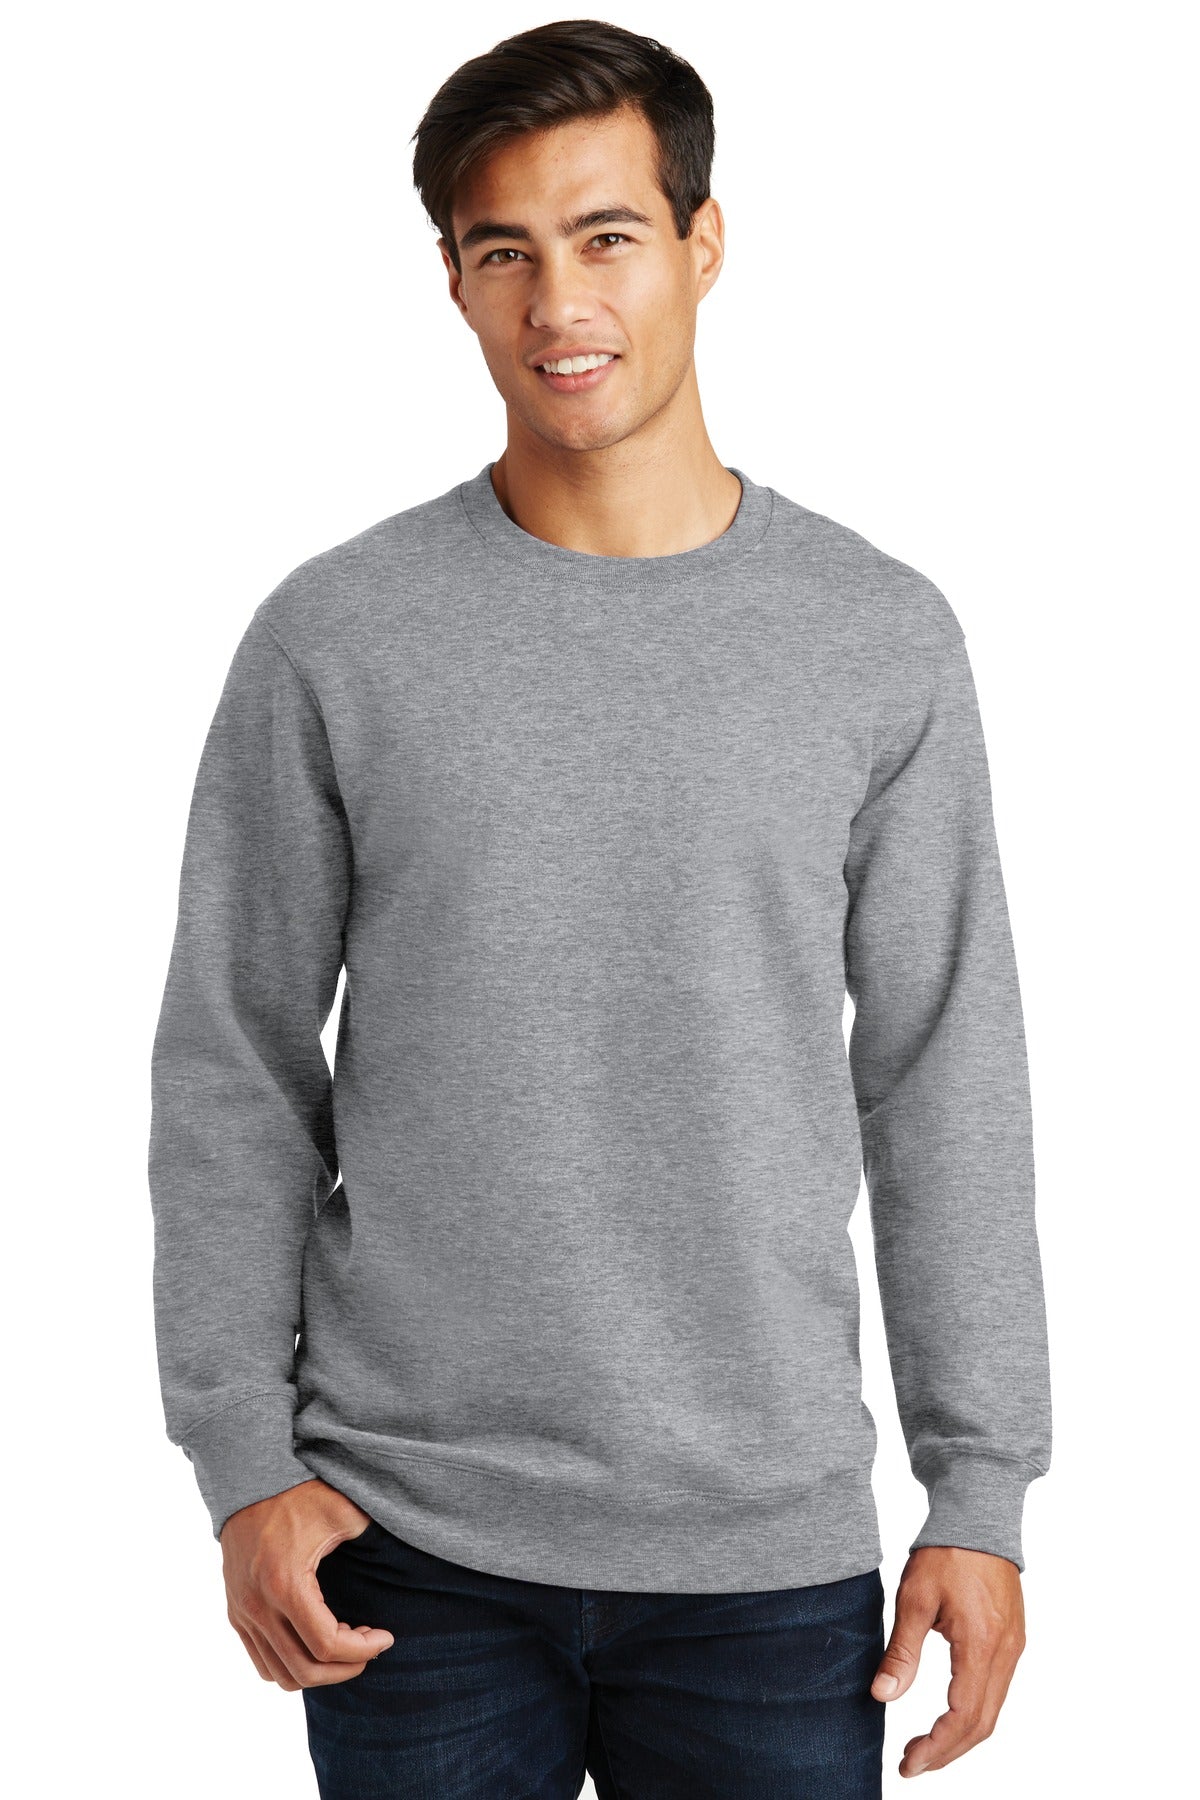 Port & Company® Fan Favorite Fleece Crewneck Sweatshirt. PC850 [Athletic Heather] - DFW Impression